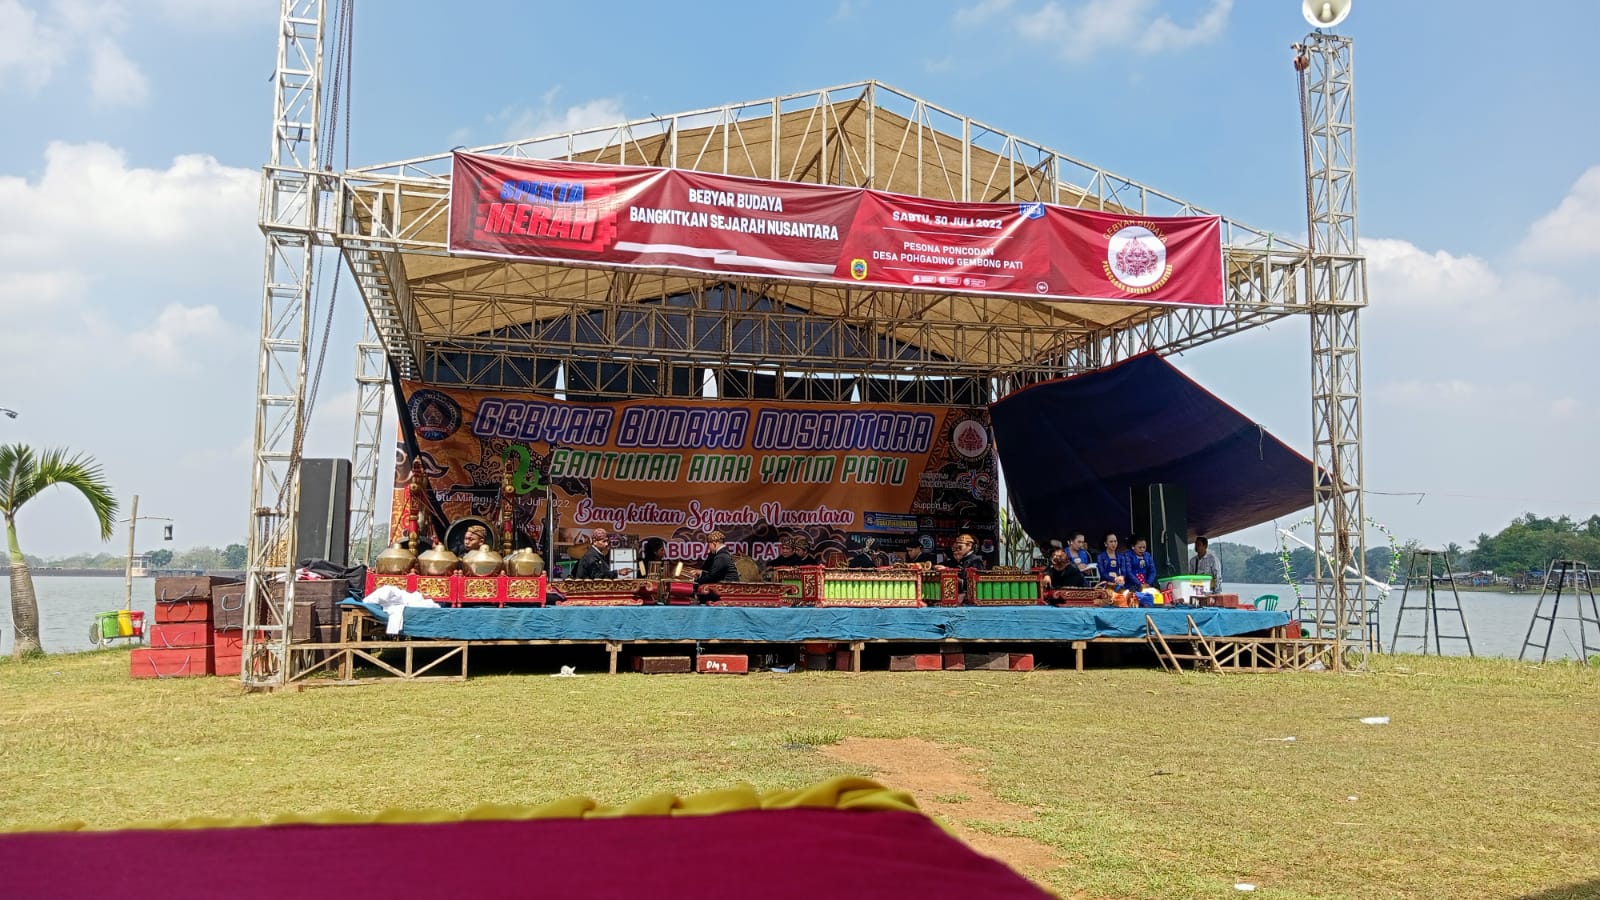 Pertunjukan karawitan dalam acara Gebyar Budaya Nusantara di Poncodan, Waduk Seloromo, Pohgading Gembong